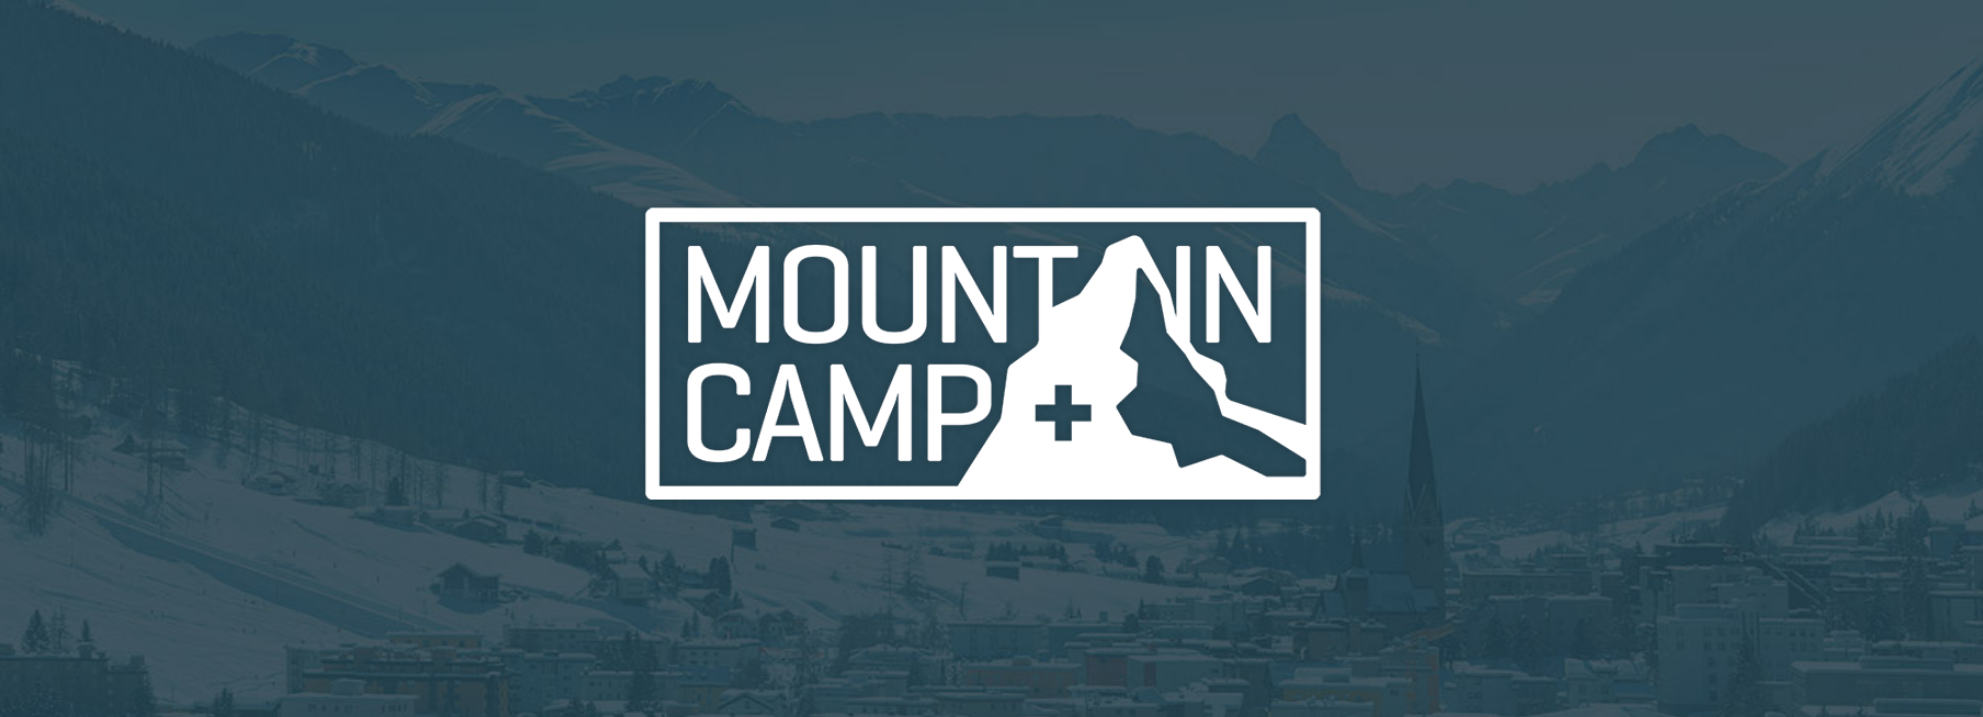 Drupal Mountain camp